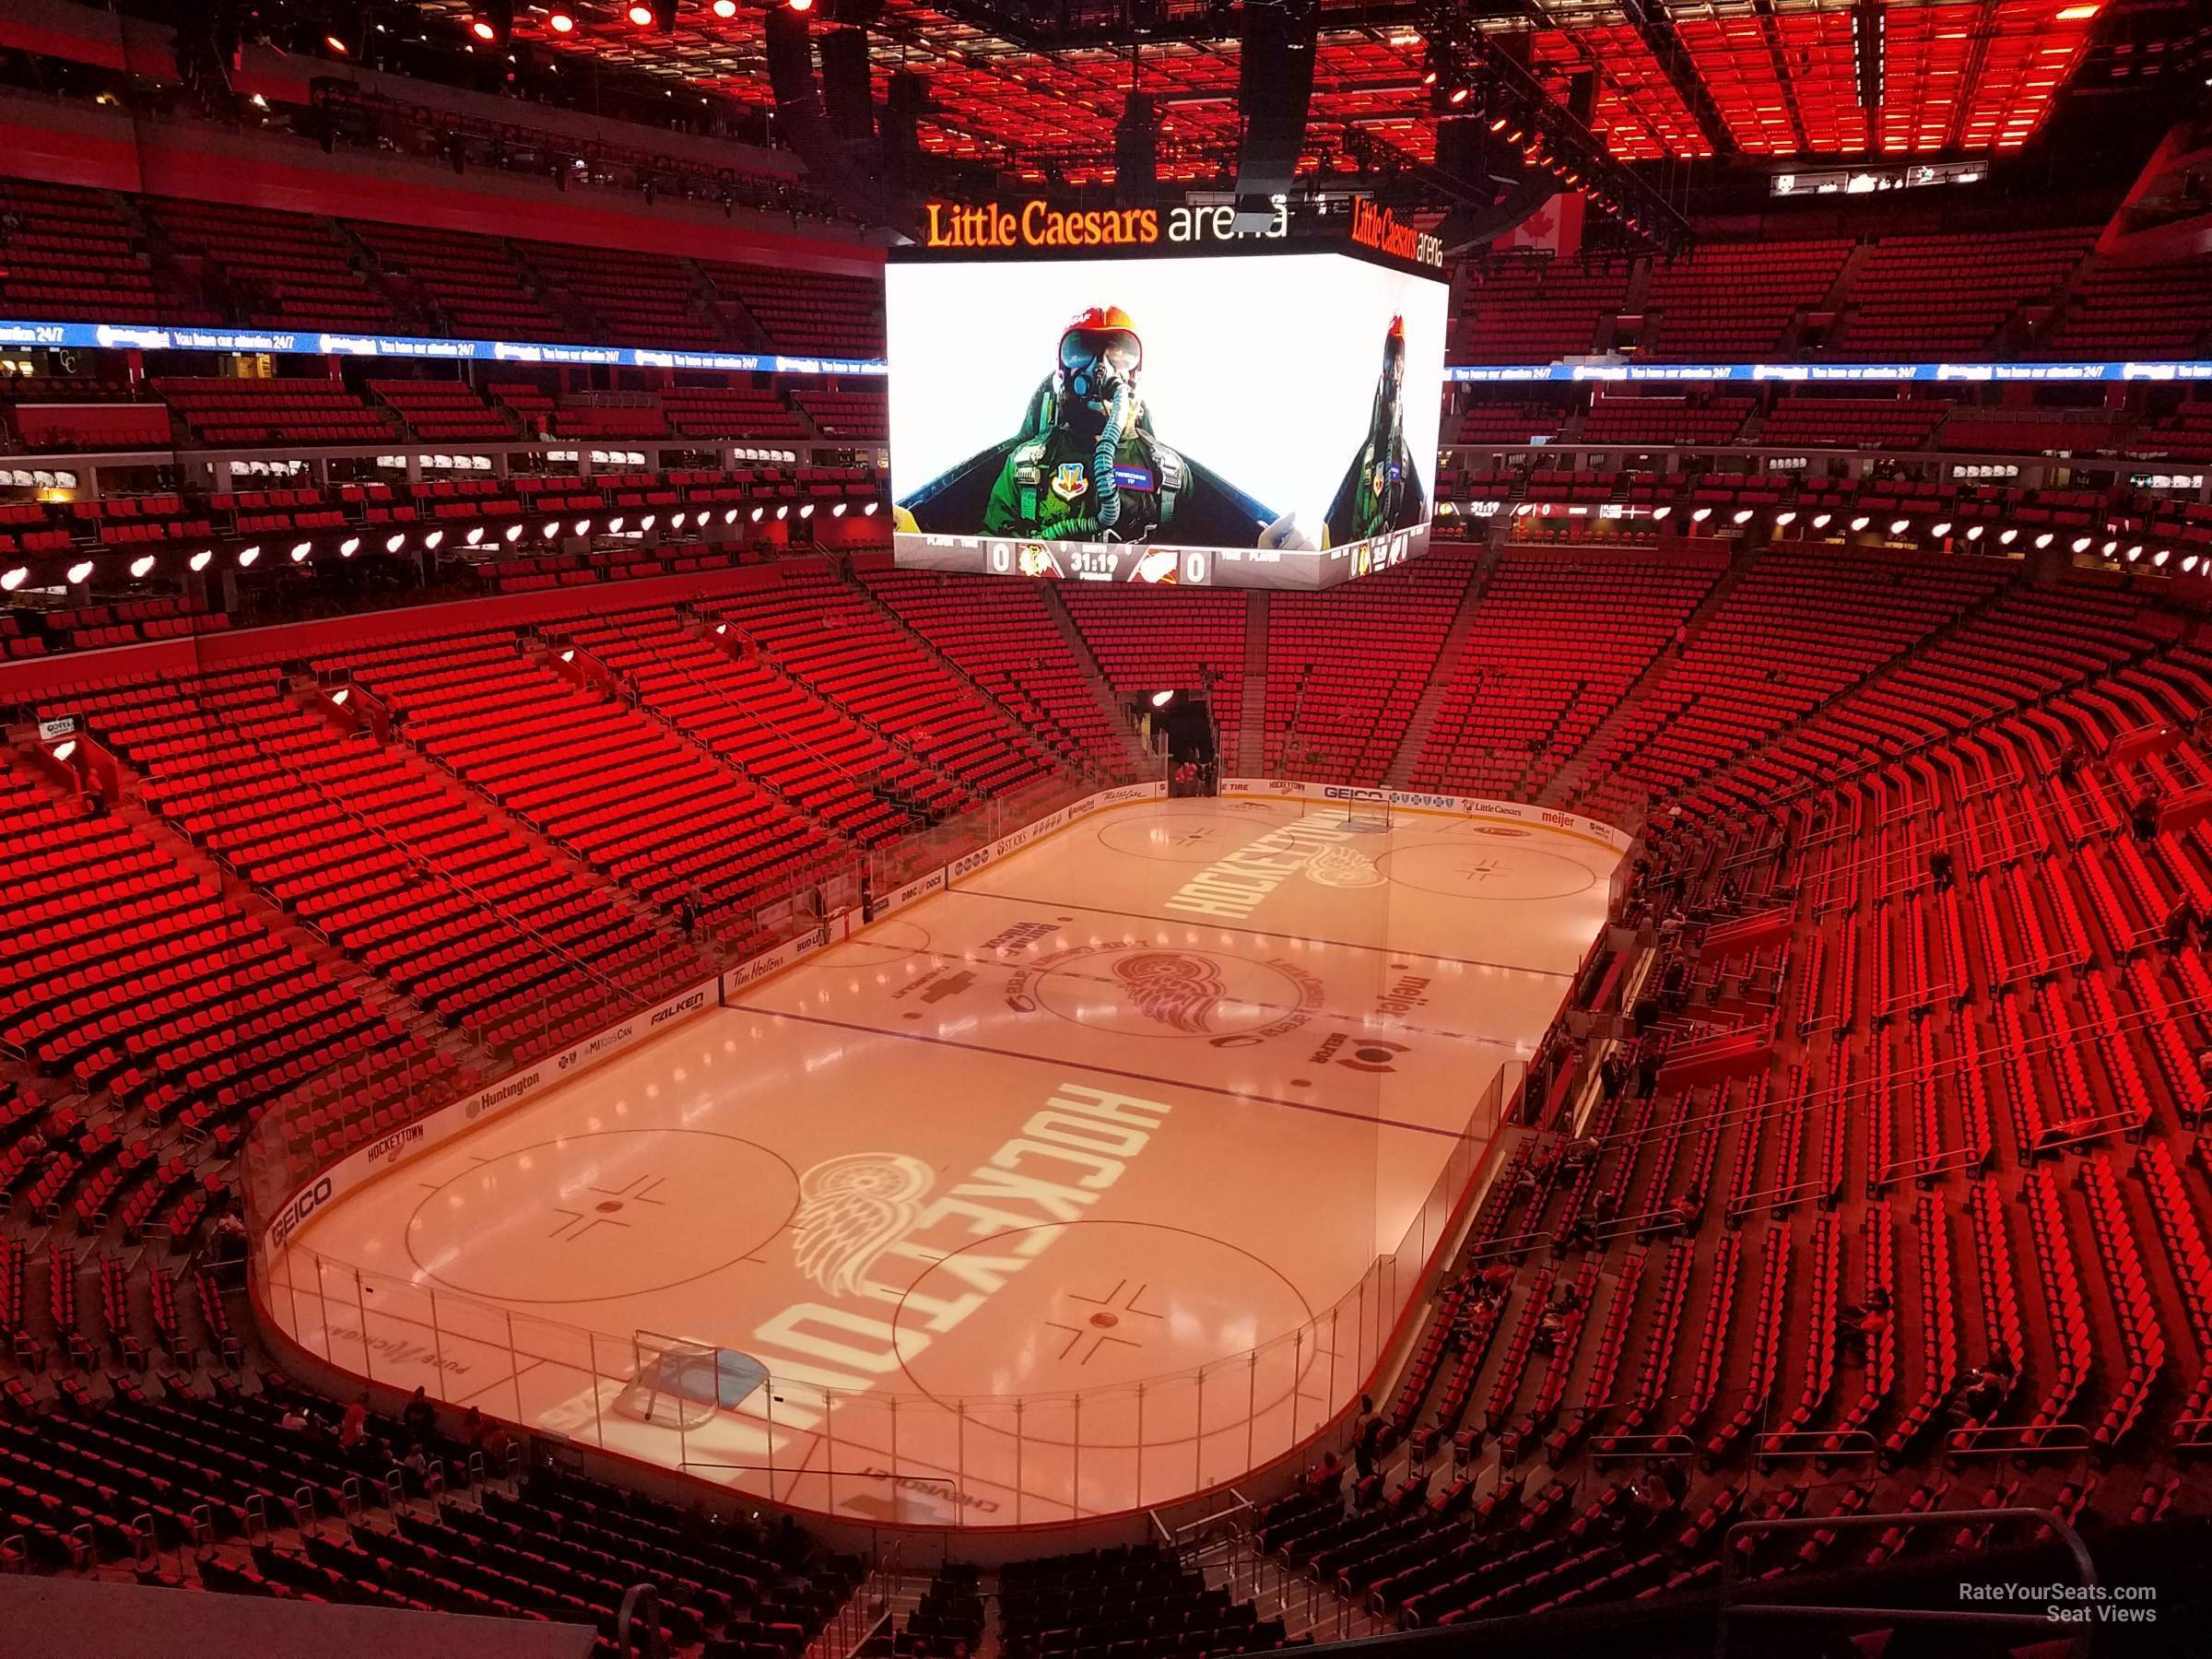 mezzanine 1, row 4 seat view  for hockey - little caesars arena